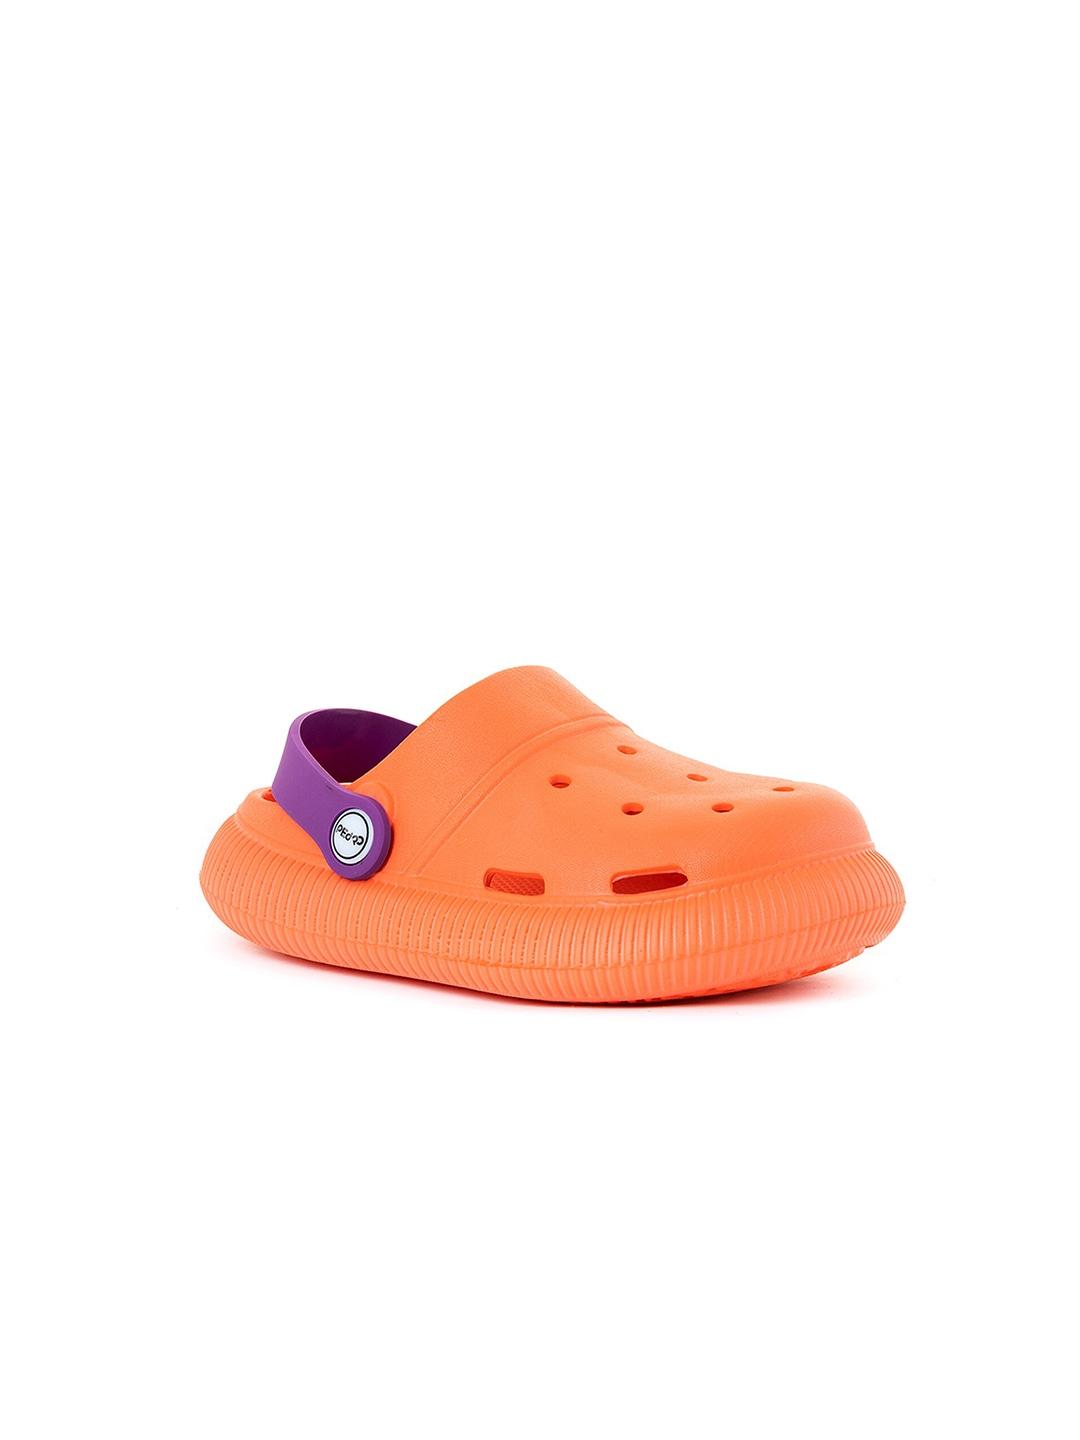 Khadims Boys Orange & Purple Clogs Sandals